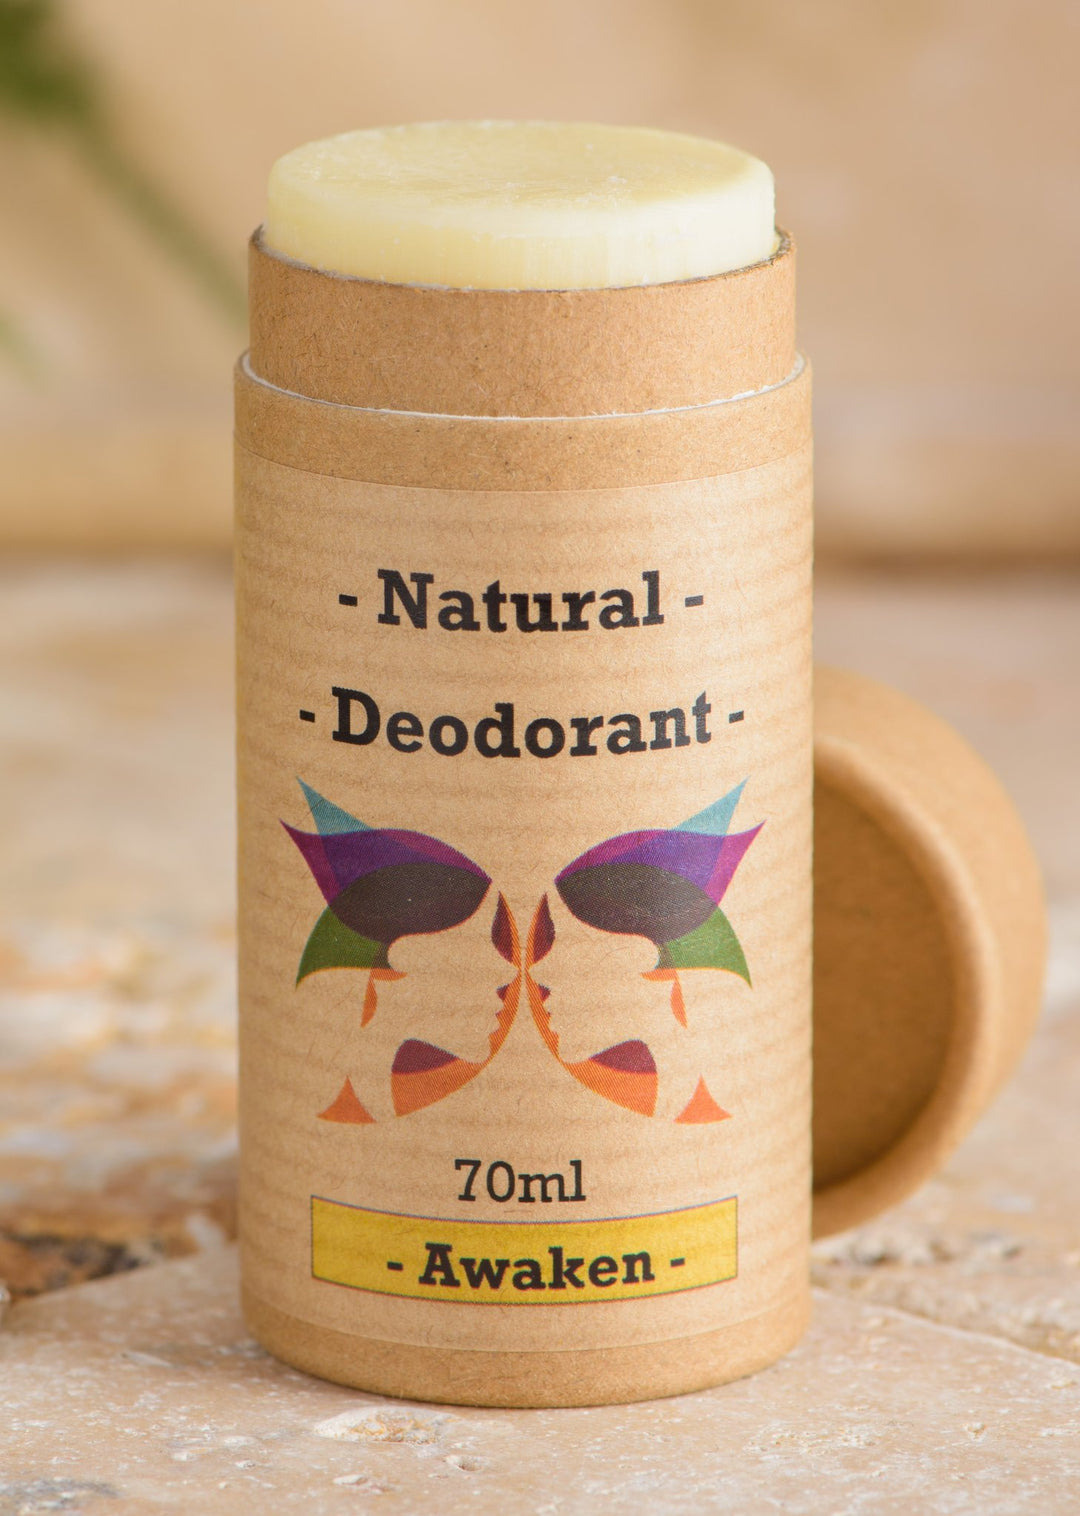 Natural Deodorant - Awaken The Secret Day Spa